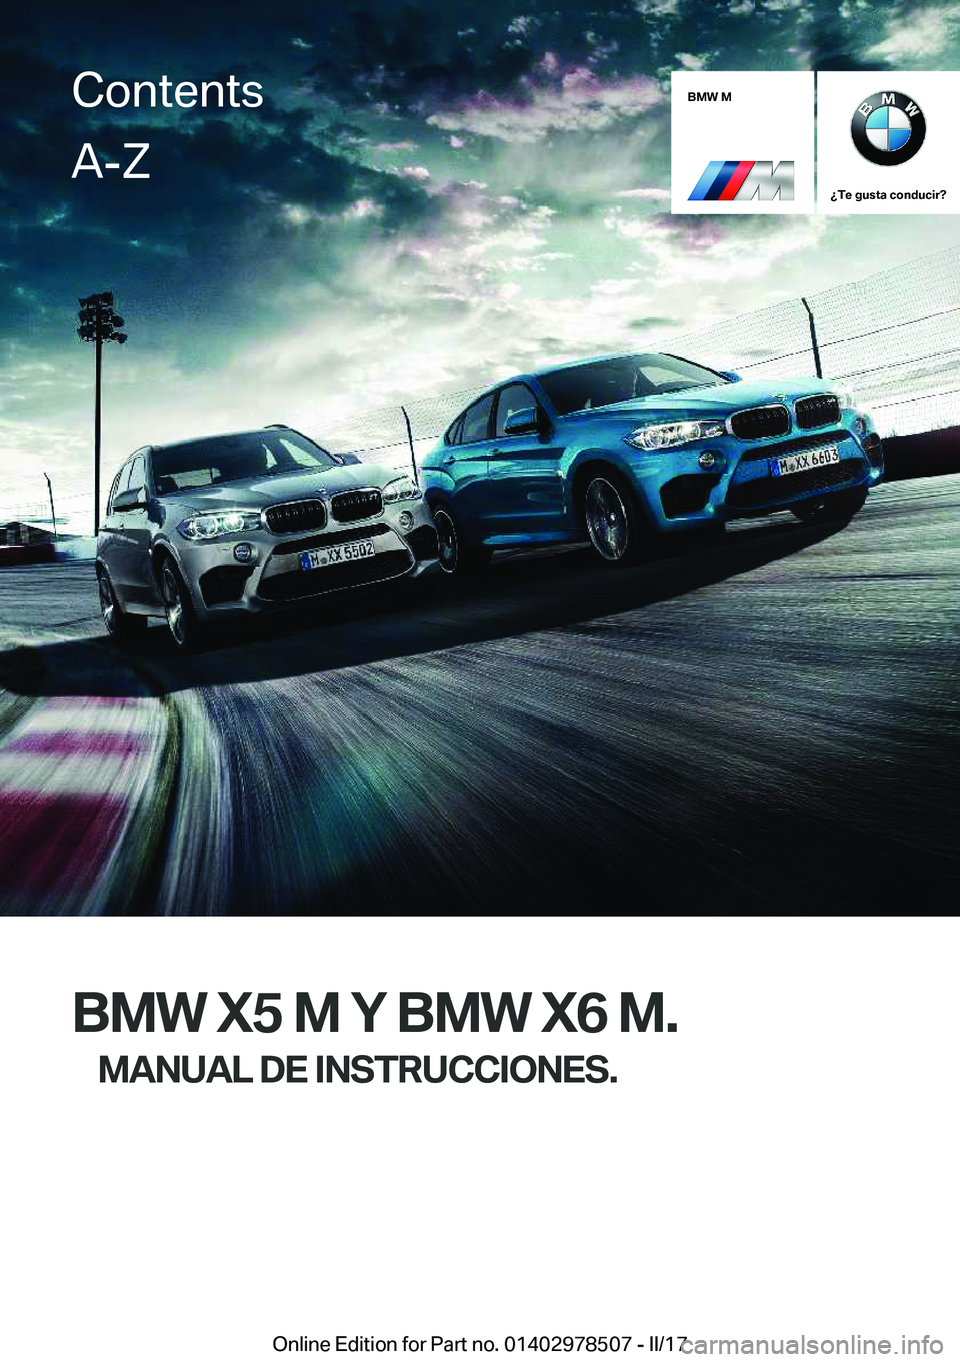 BMW X6 M 2017  Manuales de Empleo (in Spanish) �B�M�W��M
��T�e��g�u�s�t�a��c�o�n�d�u�c�i�r� 
�B�M�W��X�5��M��Y��B�M�W��X�6��M�.�M�A�N�U�A�L��D�E��I�N�S�T�R�U�C�C�I�O�N�E�S�.
�C�o�n�t�e�n�t�s�A�-�Z
�O�n�l�i�n�e� �E�d�i�t�i�o�n� �f�o�r� 